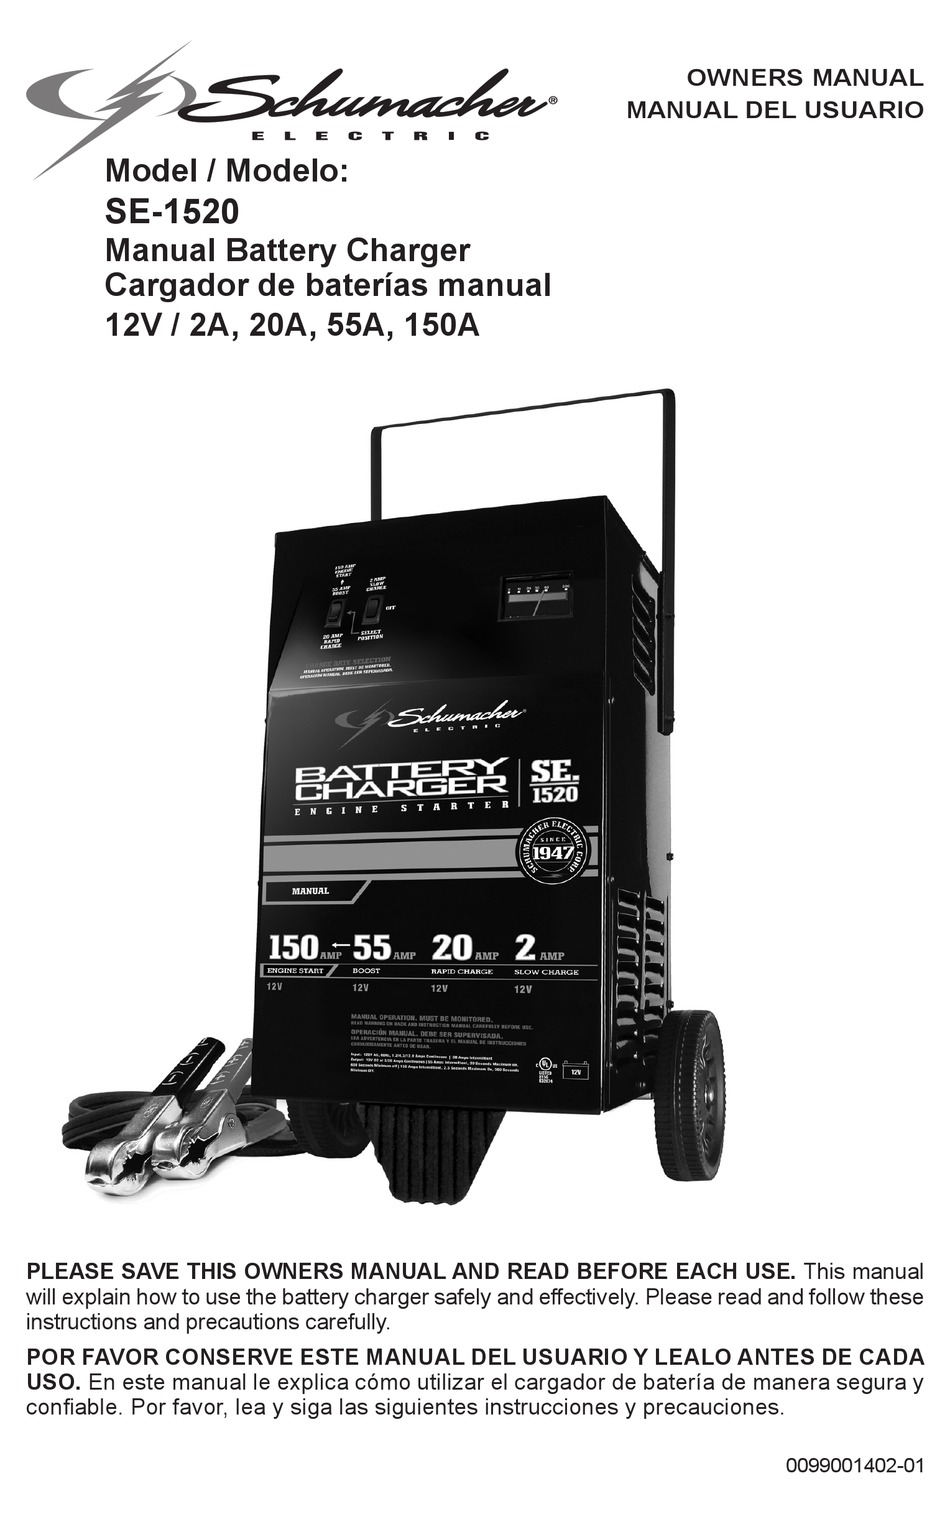 SCHUMACHER ELECTRIC SE-1520 OWNER'S MANUAL Pdf Download | ManualsLib